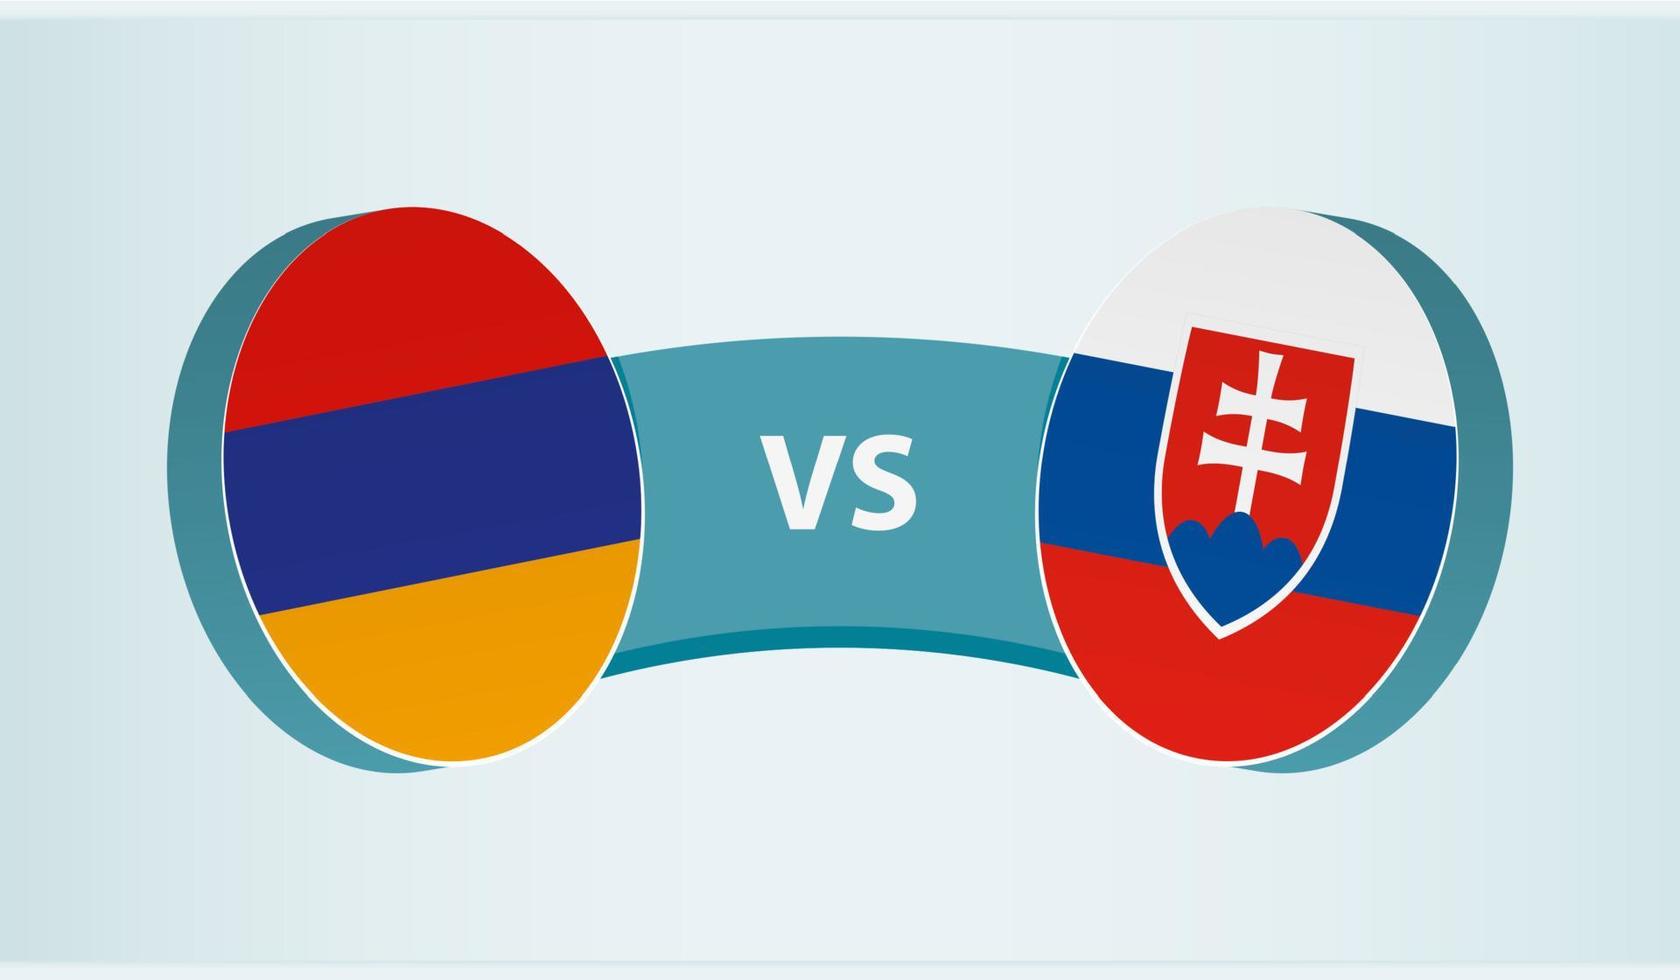 Armenia versus Slovakia, team sports competition concept. vector